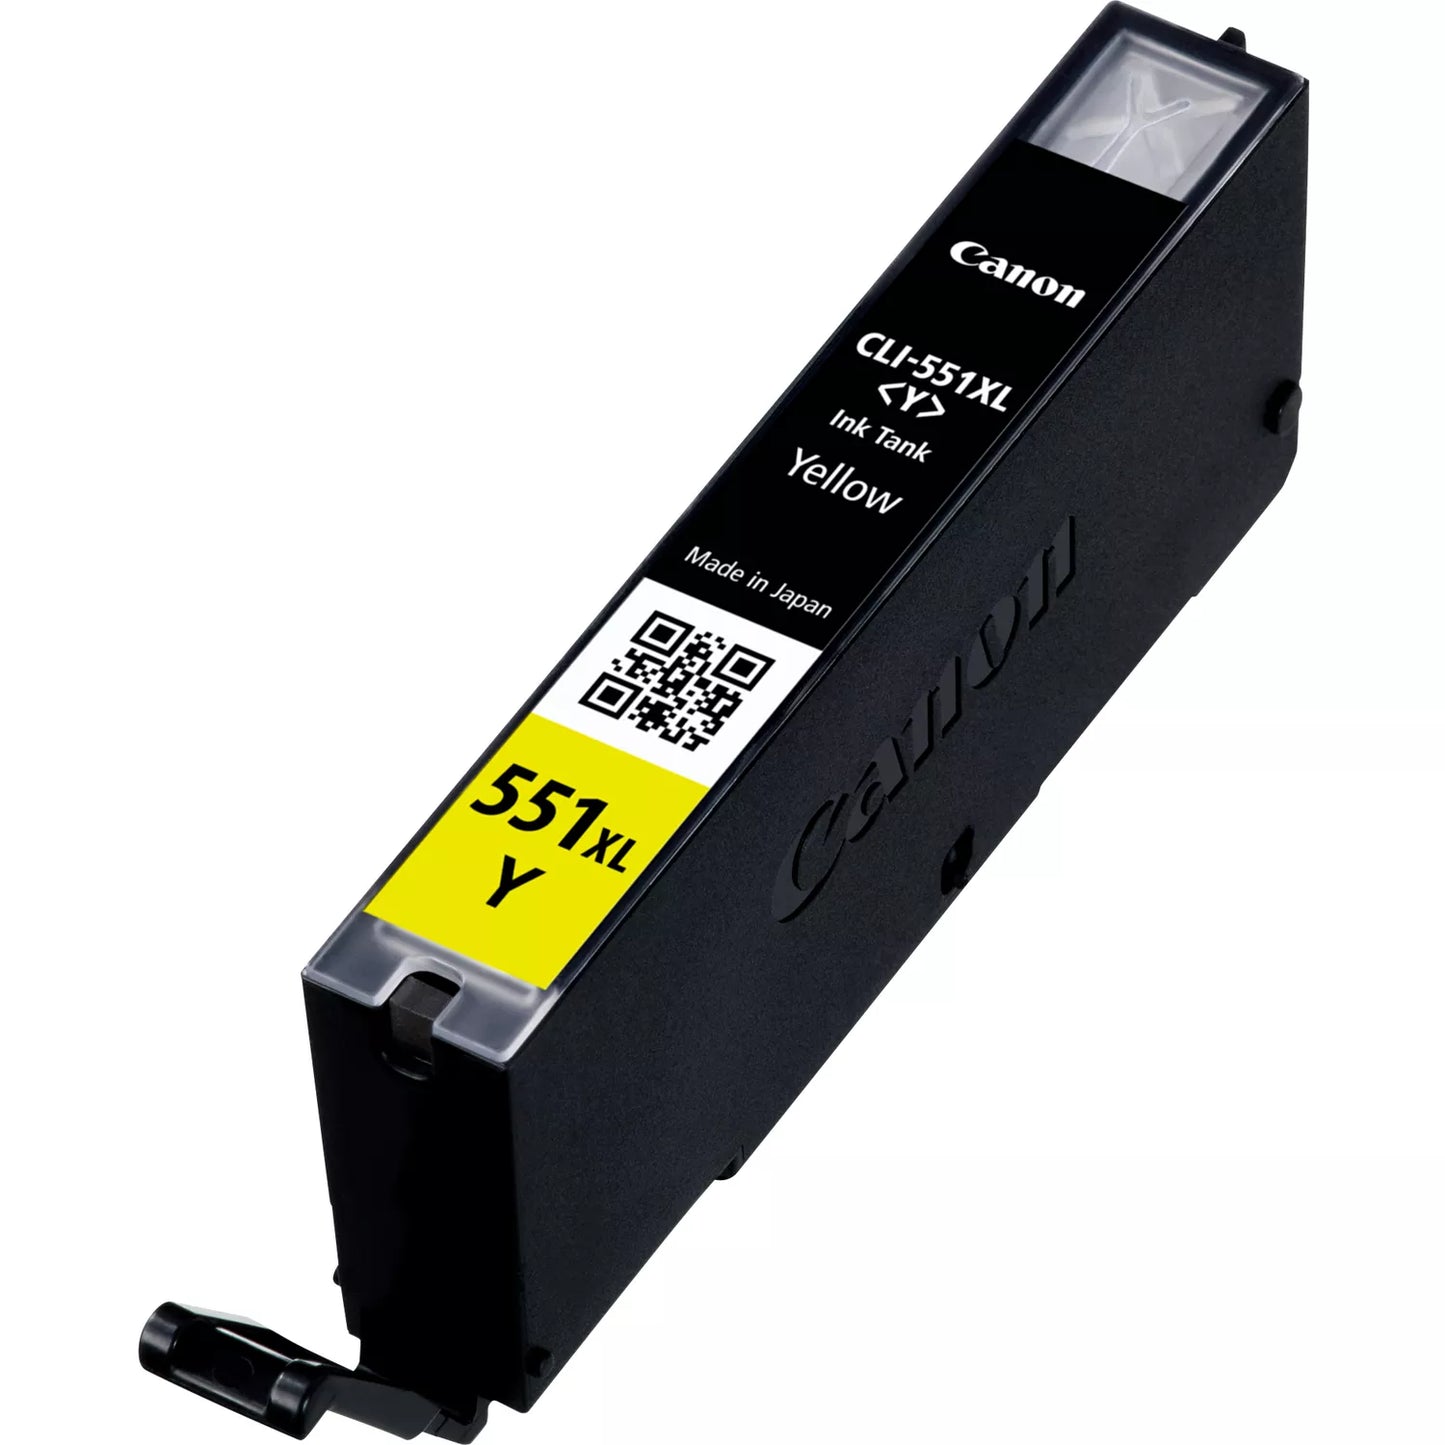 Canon CLI-551XL Y Ink Cartridge | PIXMA | Yellow